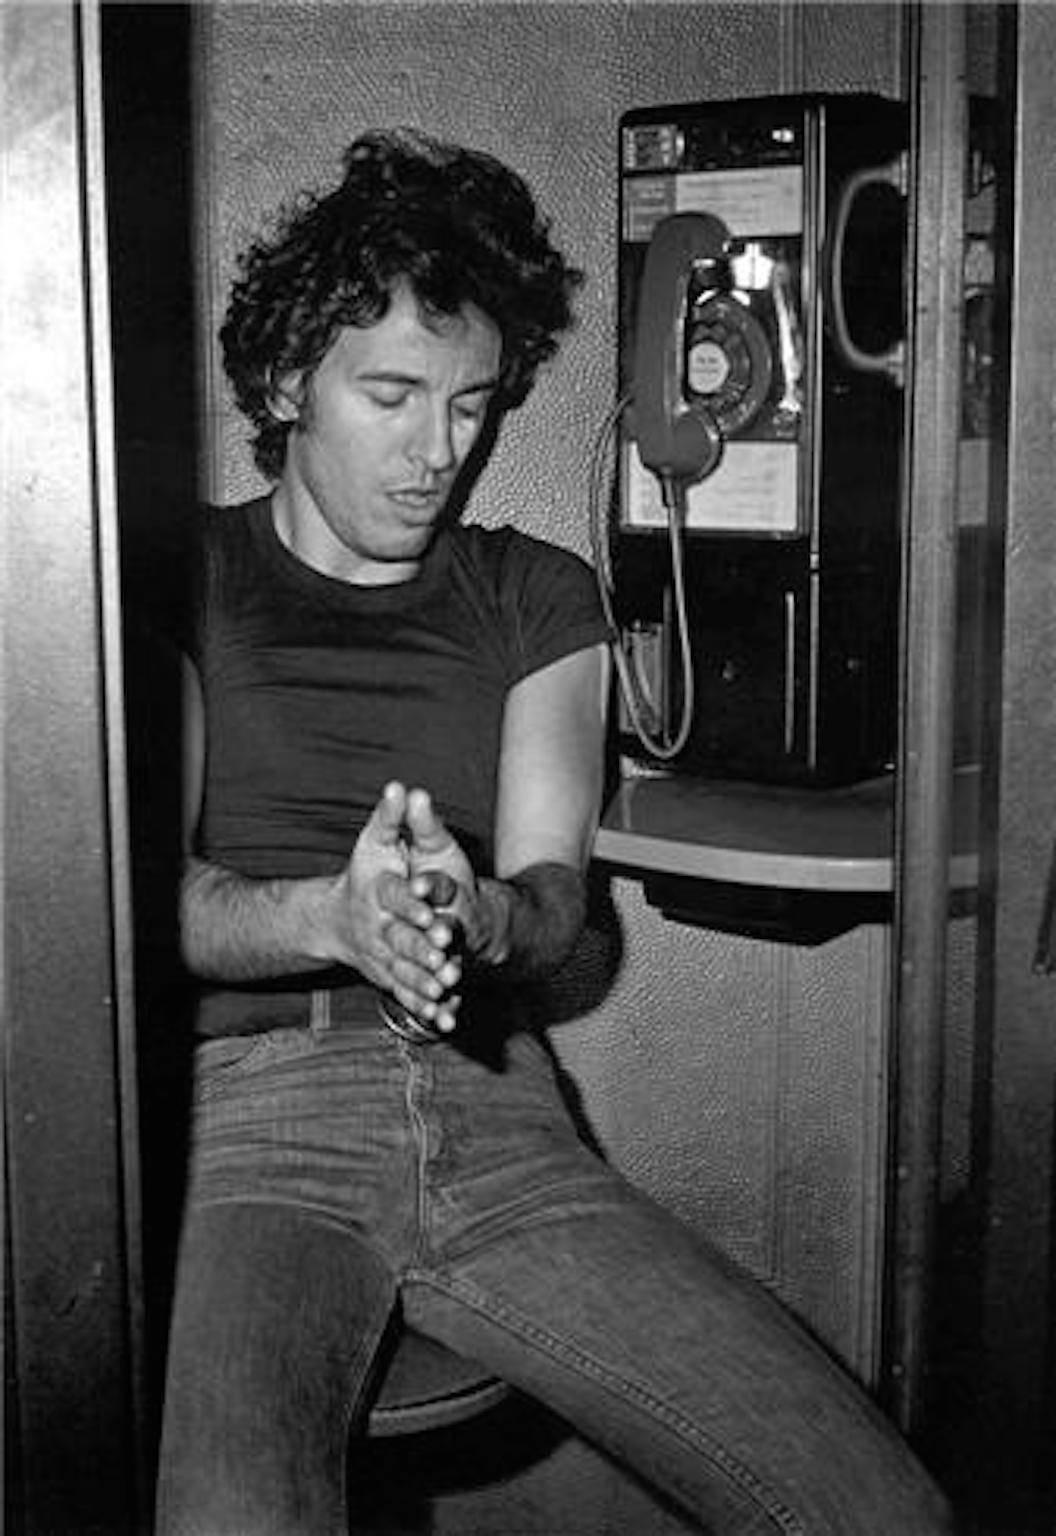 Bruce Springsteen, « The Call », 1978 - Photograph de Frank Stefanko